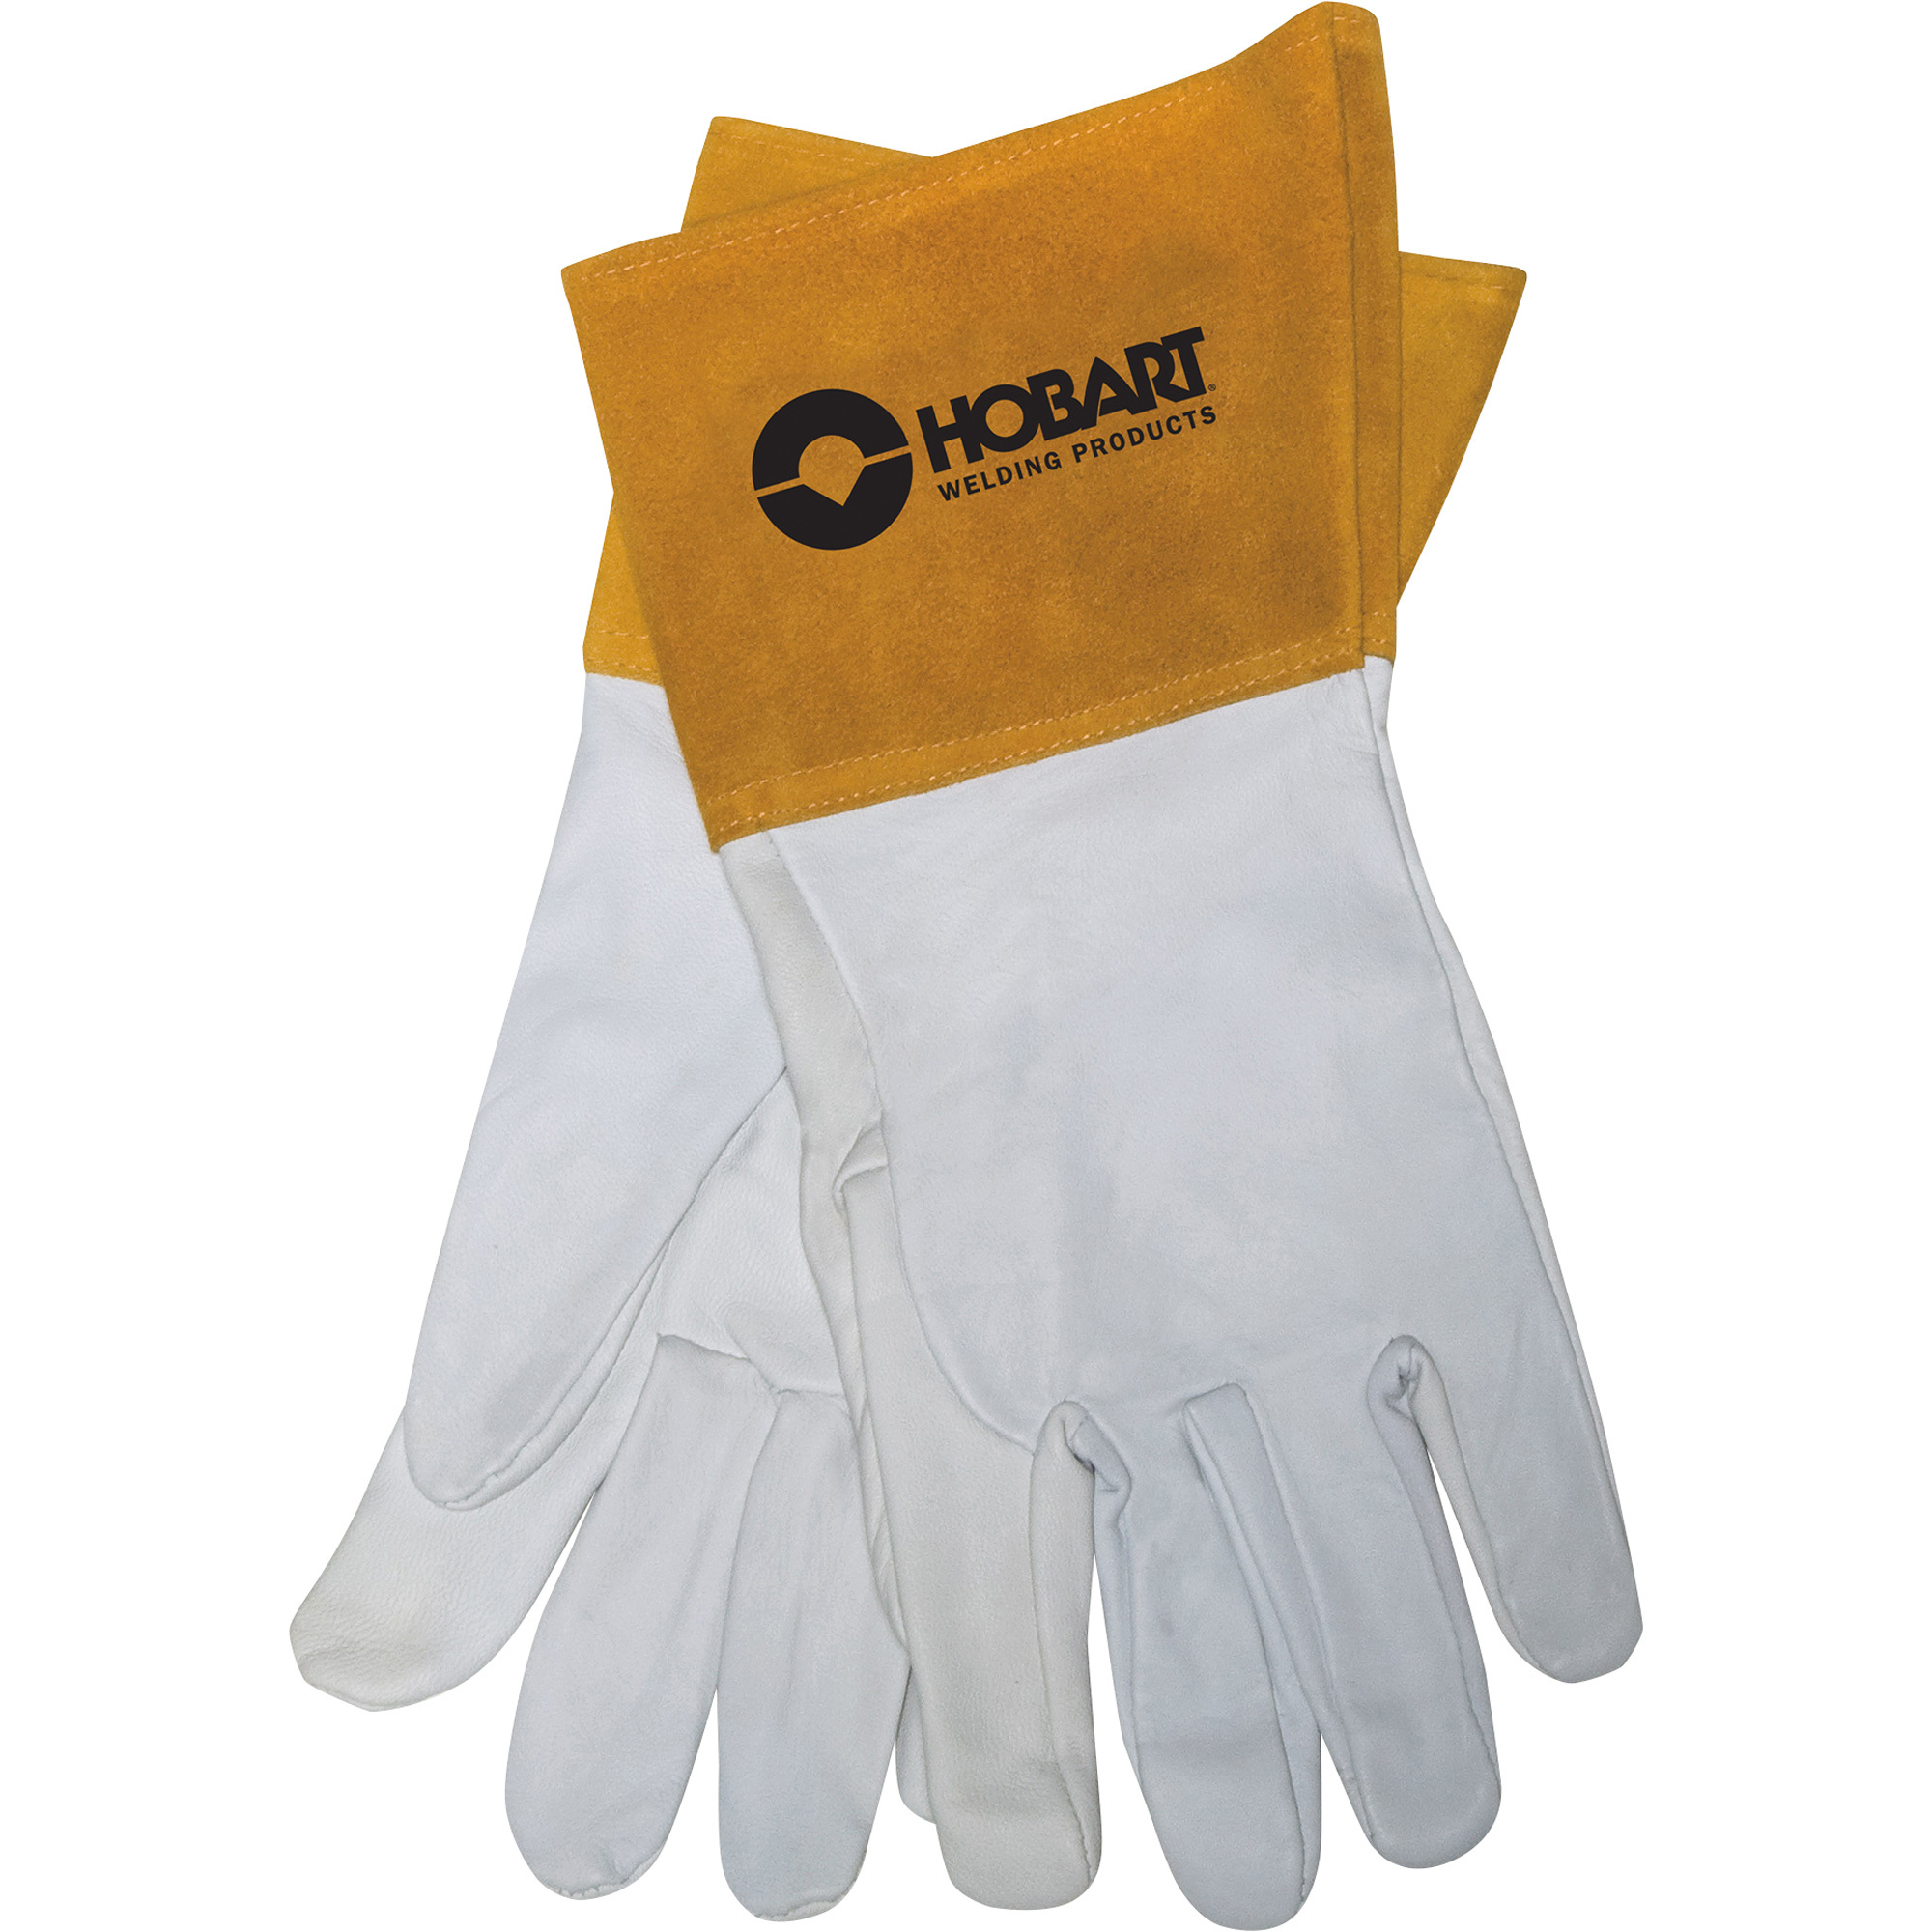 Hobart TIG Welding Gloves â Leather, Tan and White, X-Large, Pair, Model 770715